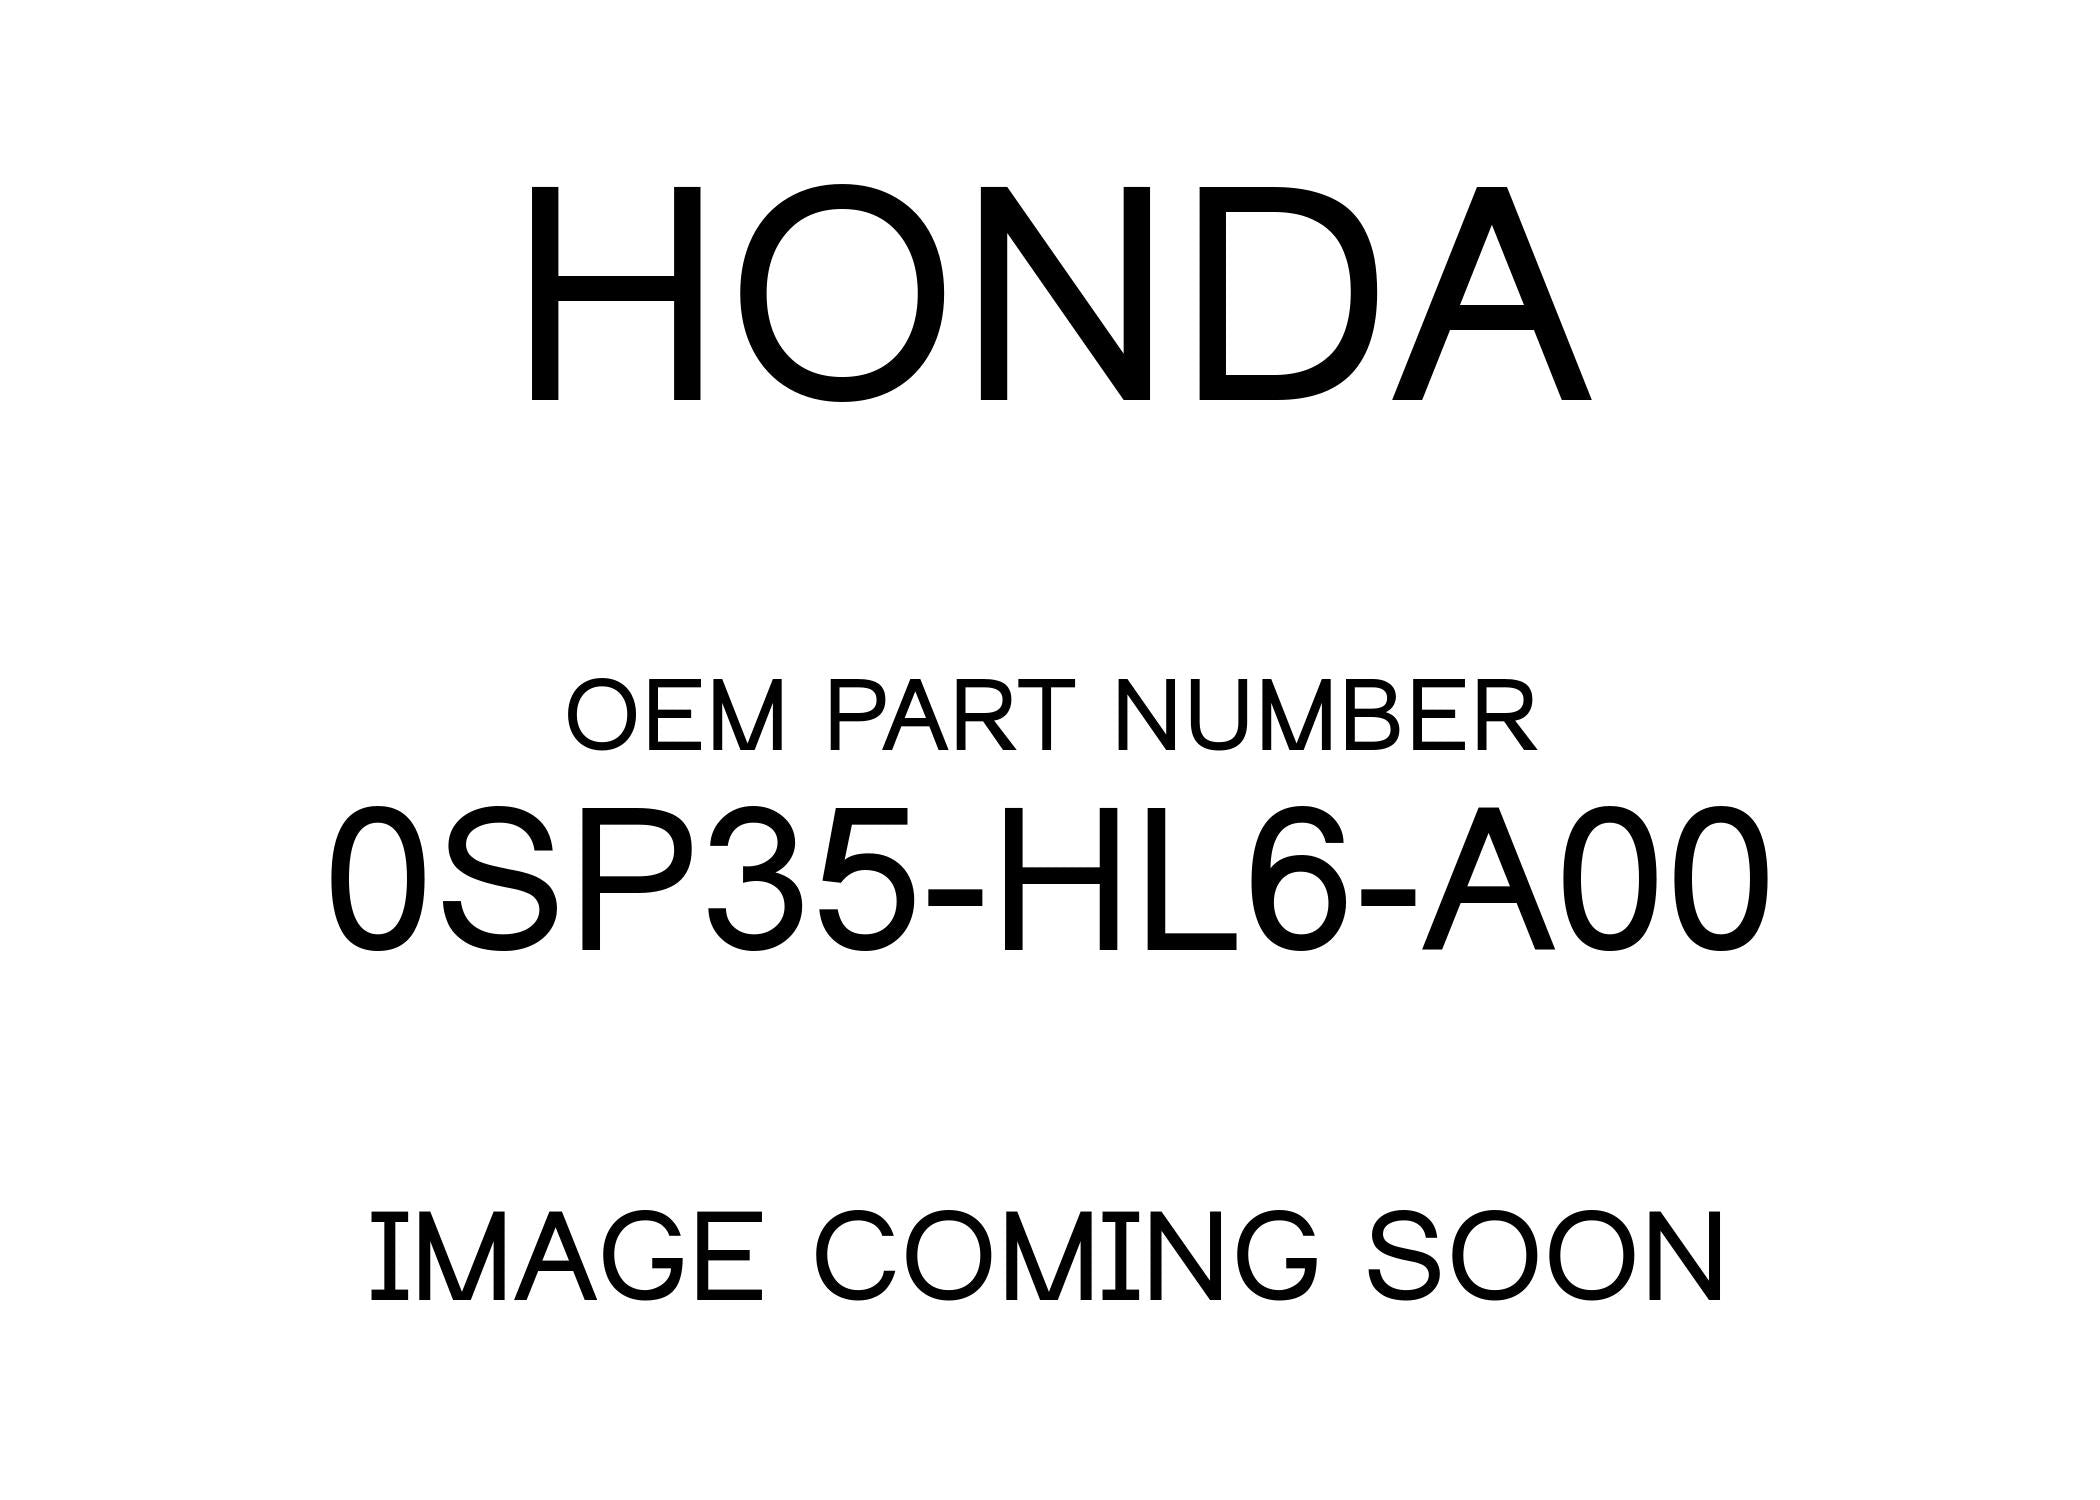 Honda 0Sp35-Hl6-A00 Louis Powersports